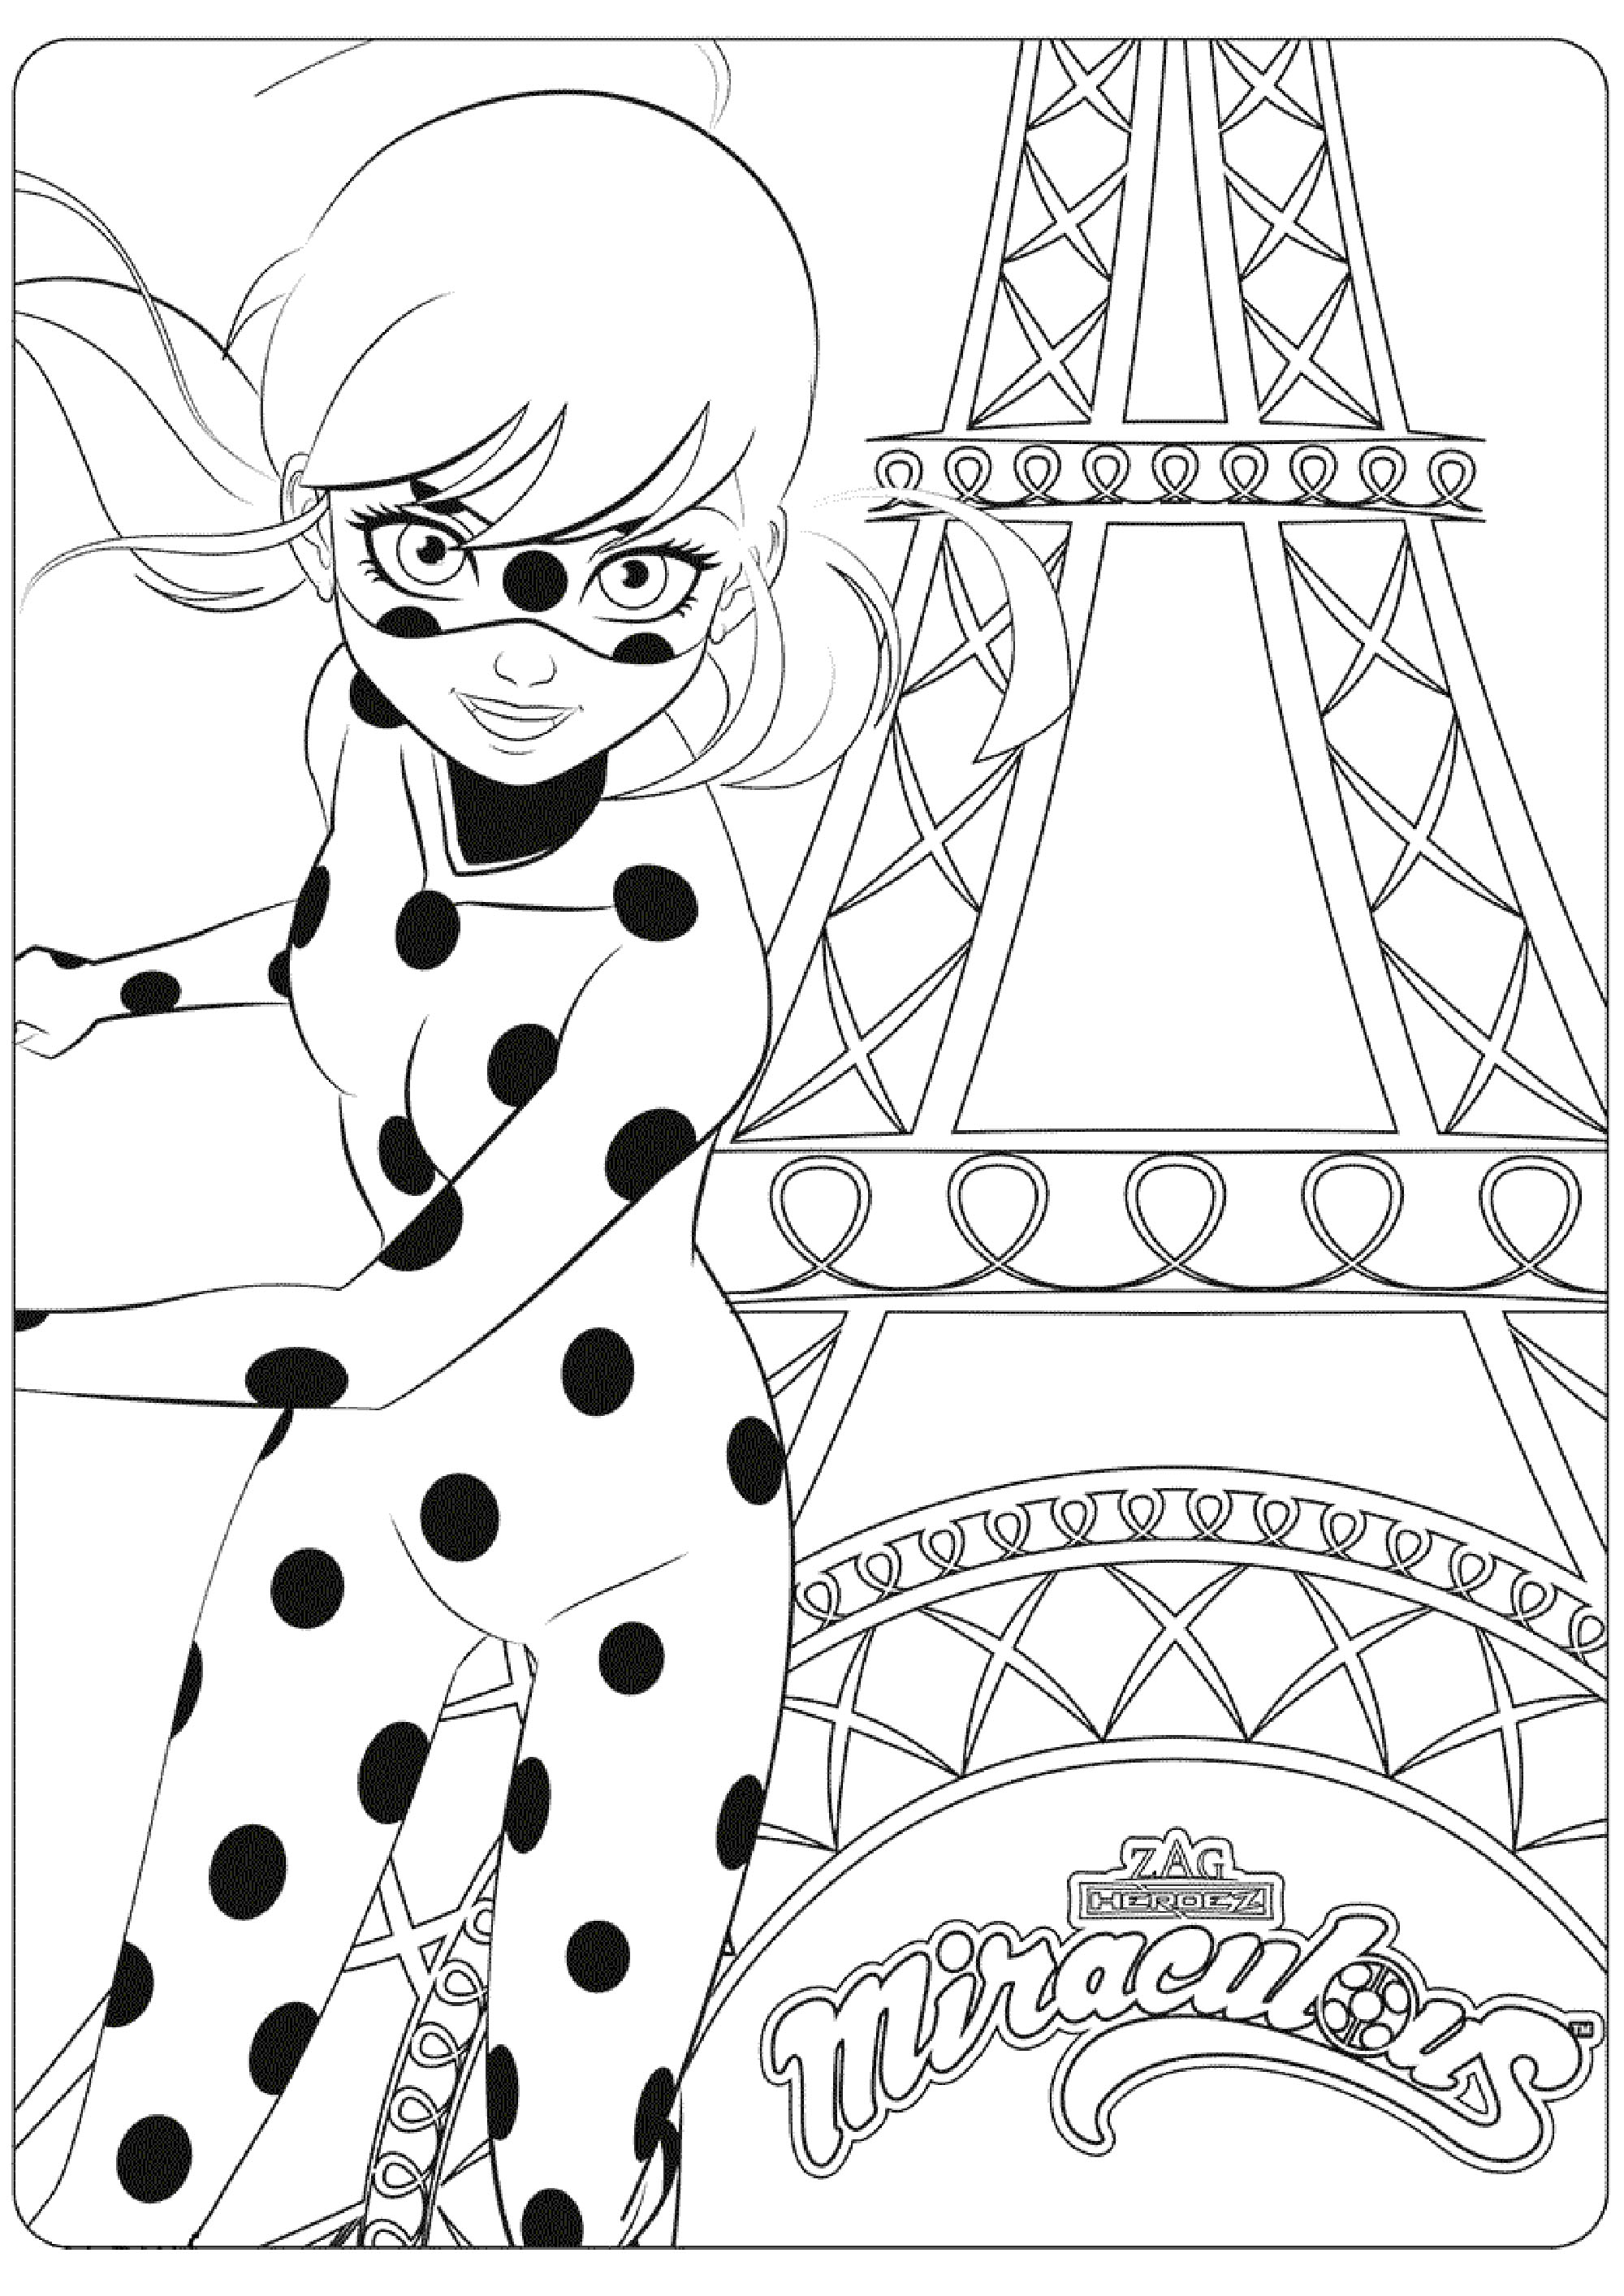 Desenhos para Colorir da Ladybug  Ladybug coloring page, Ladybug cartoon,  Free coloring pages